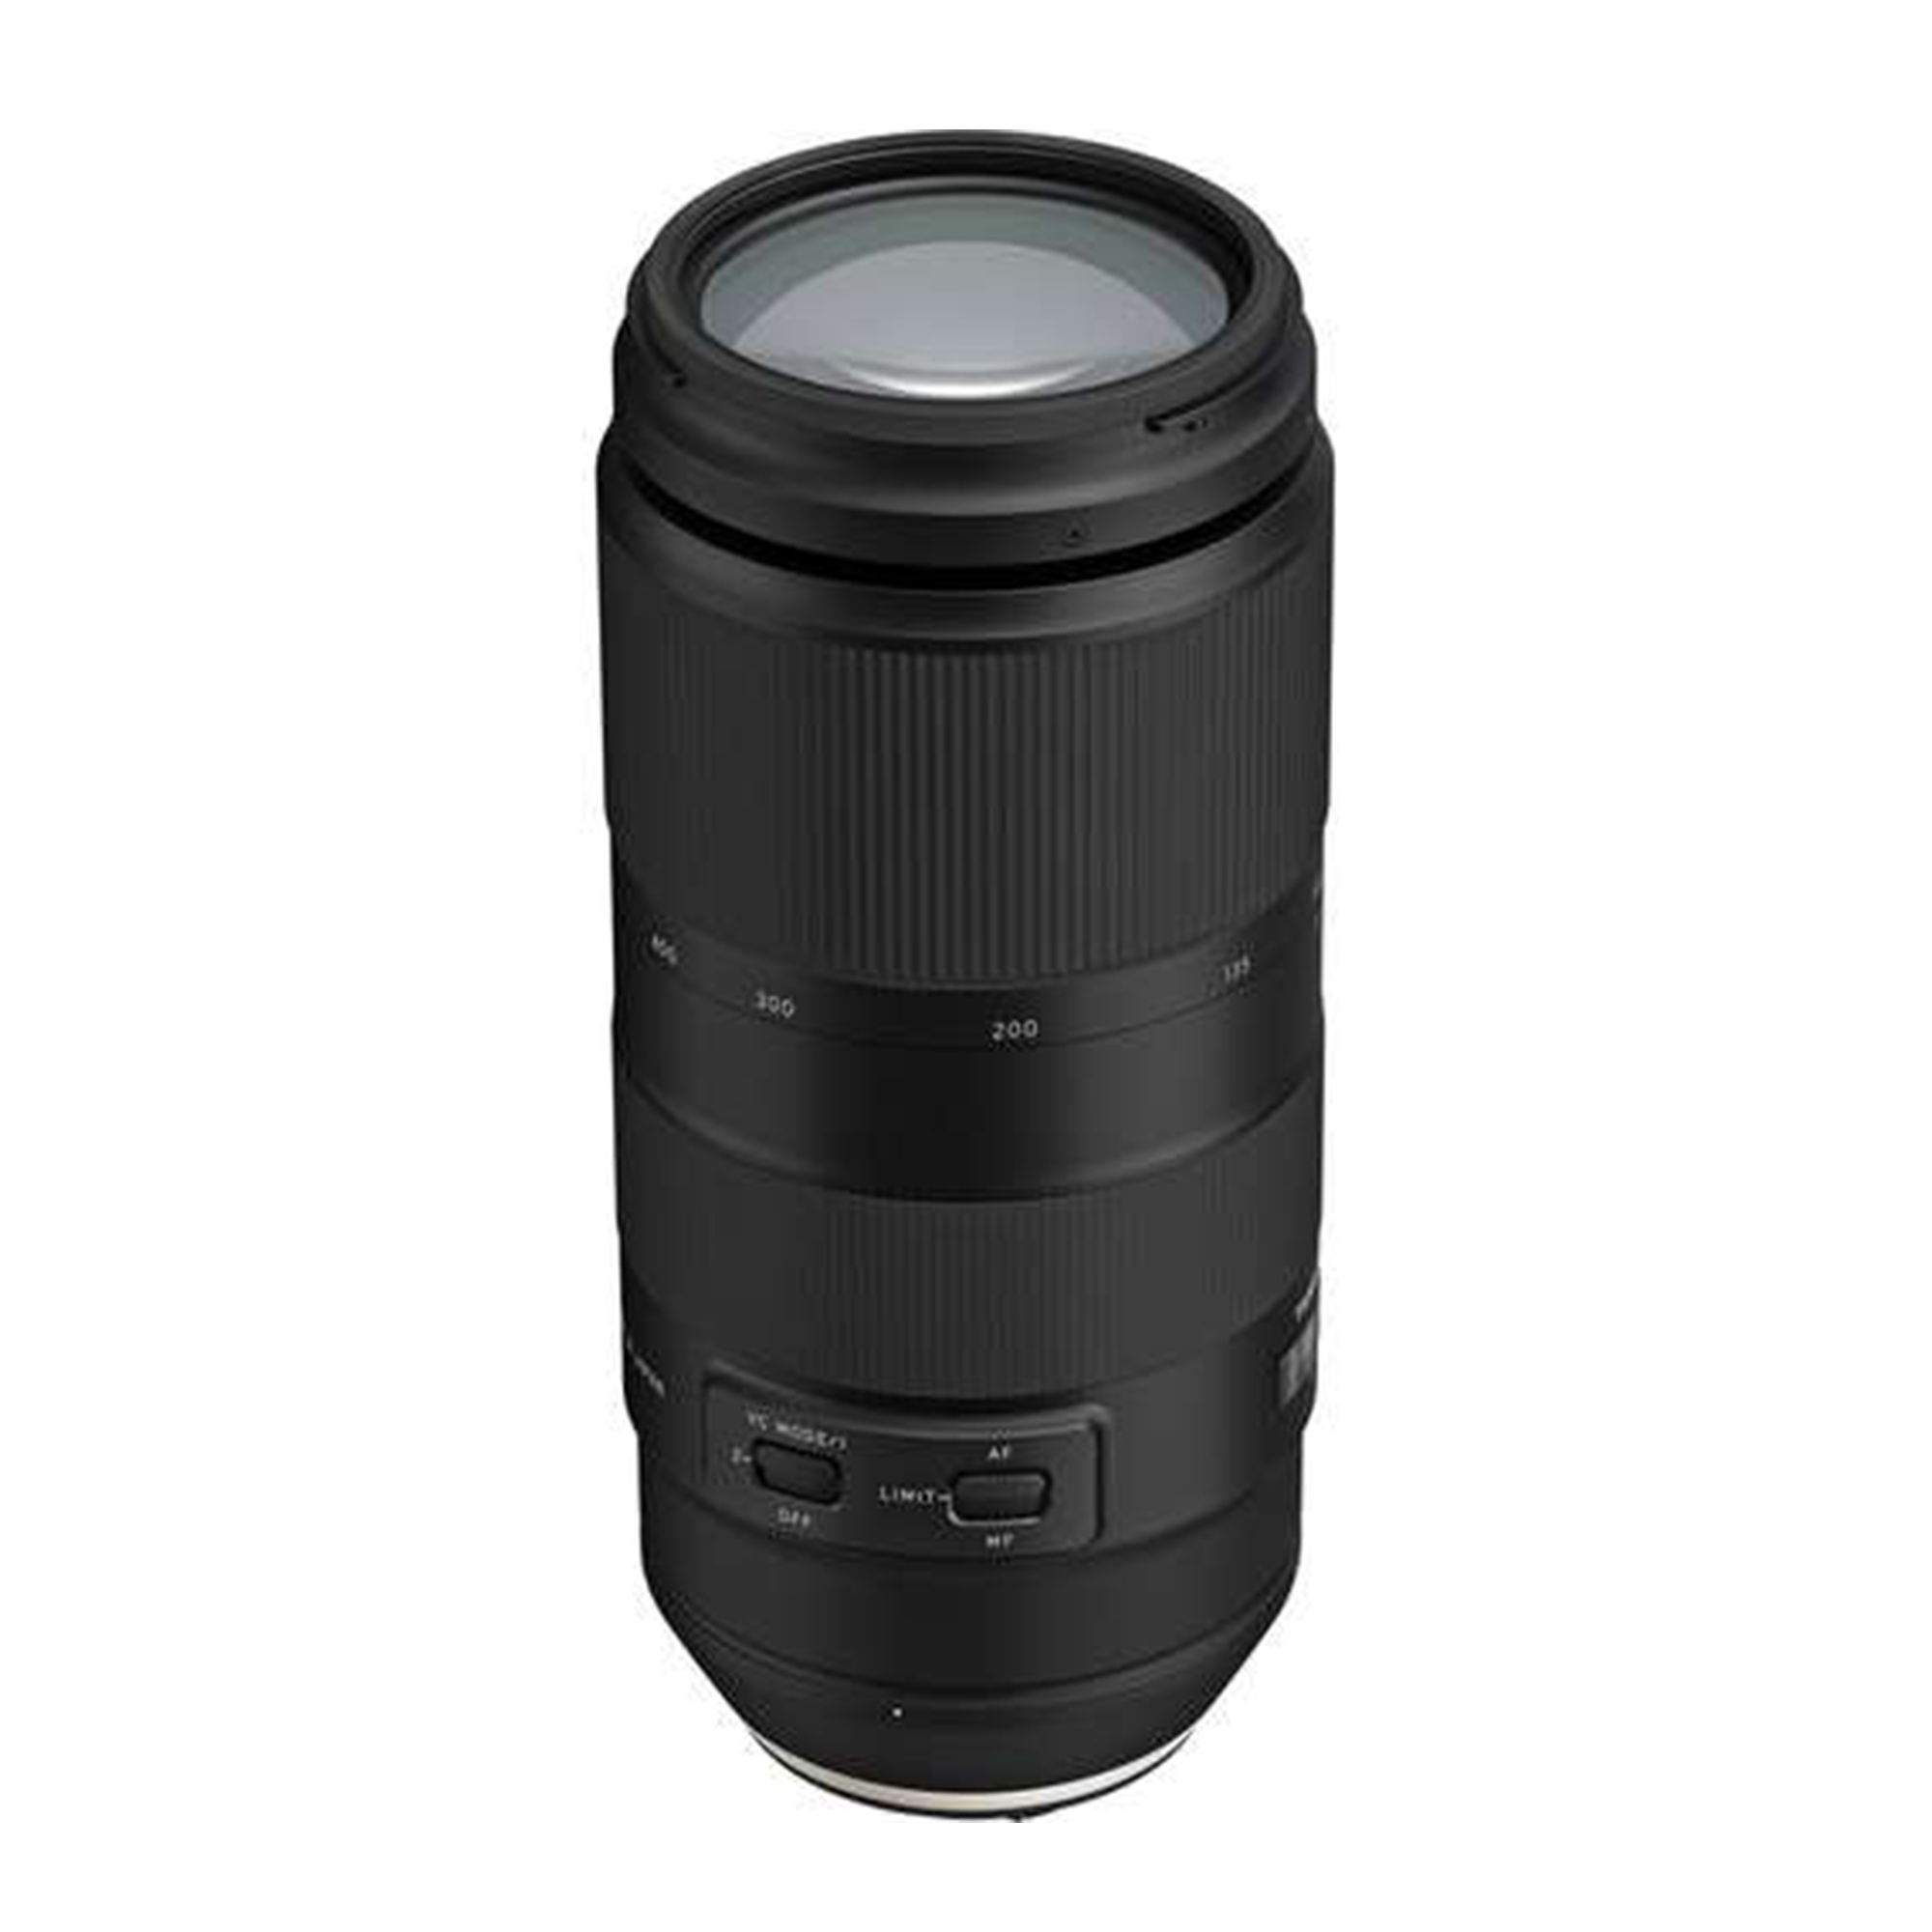 Tamron 100-400mm f/4.5-6.3 Di VC USD Lens for Nikon AF